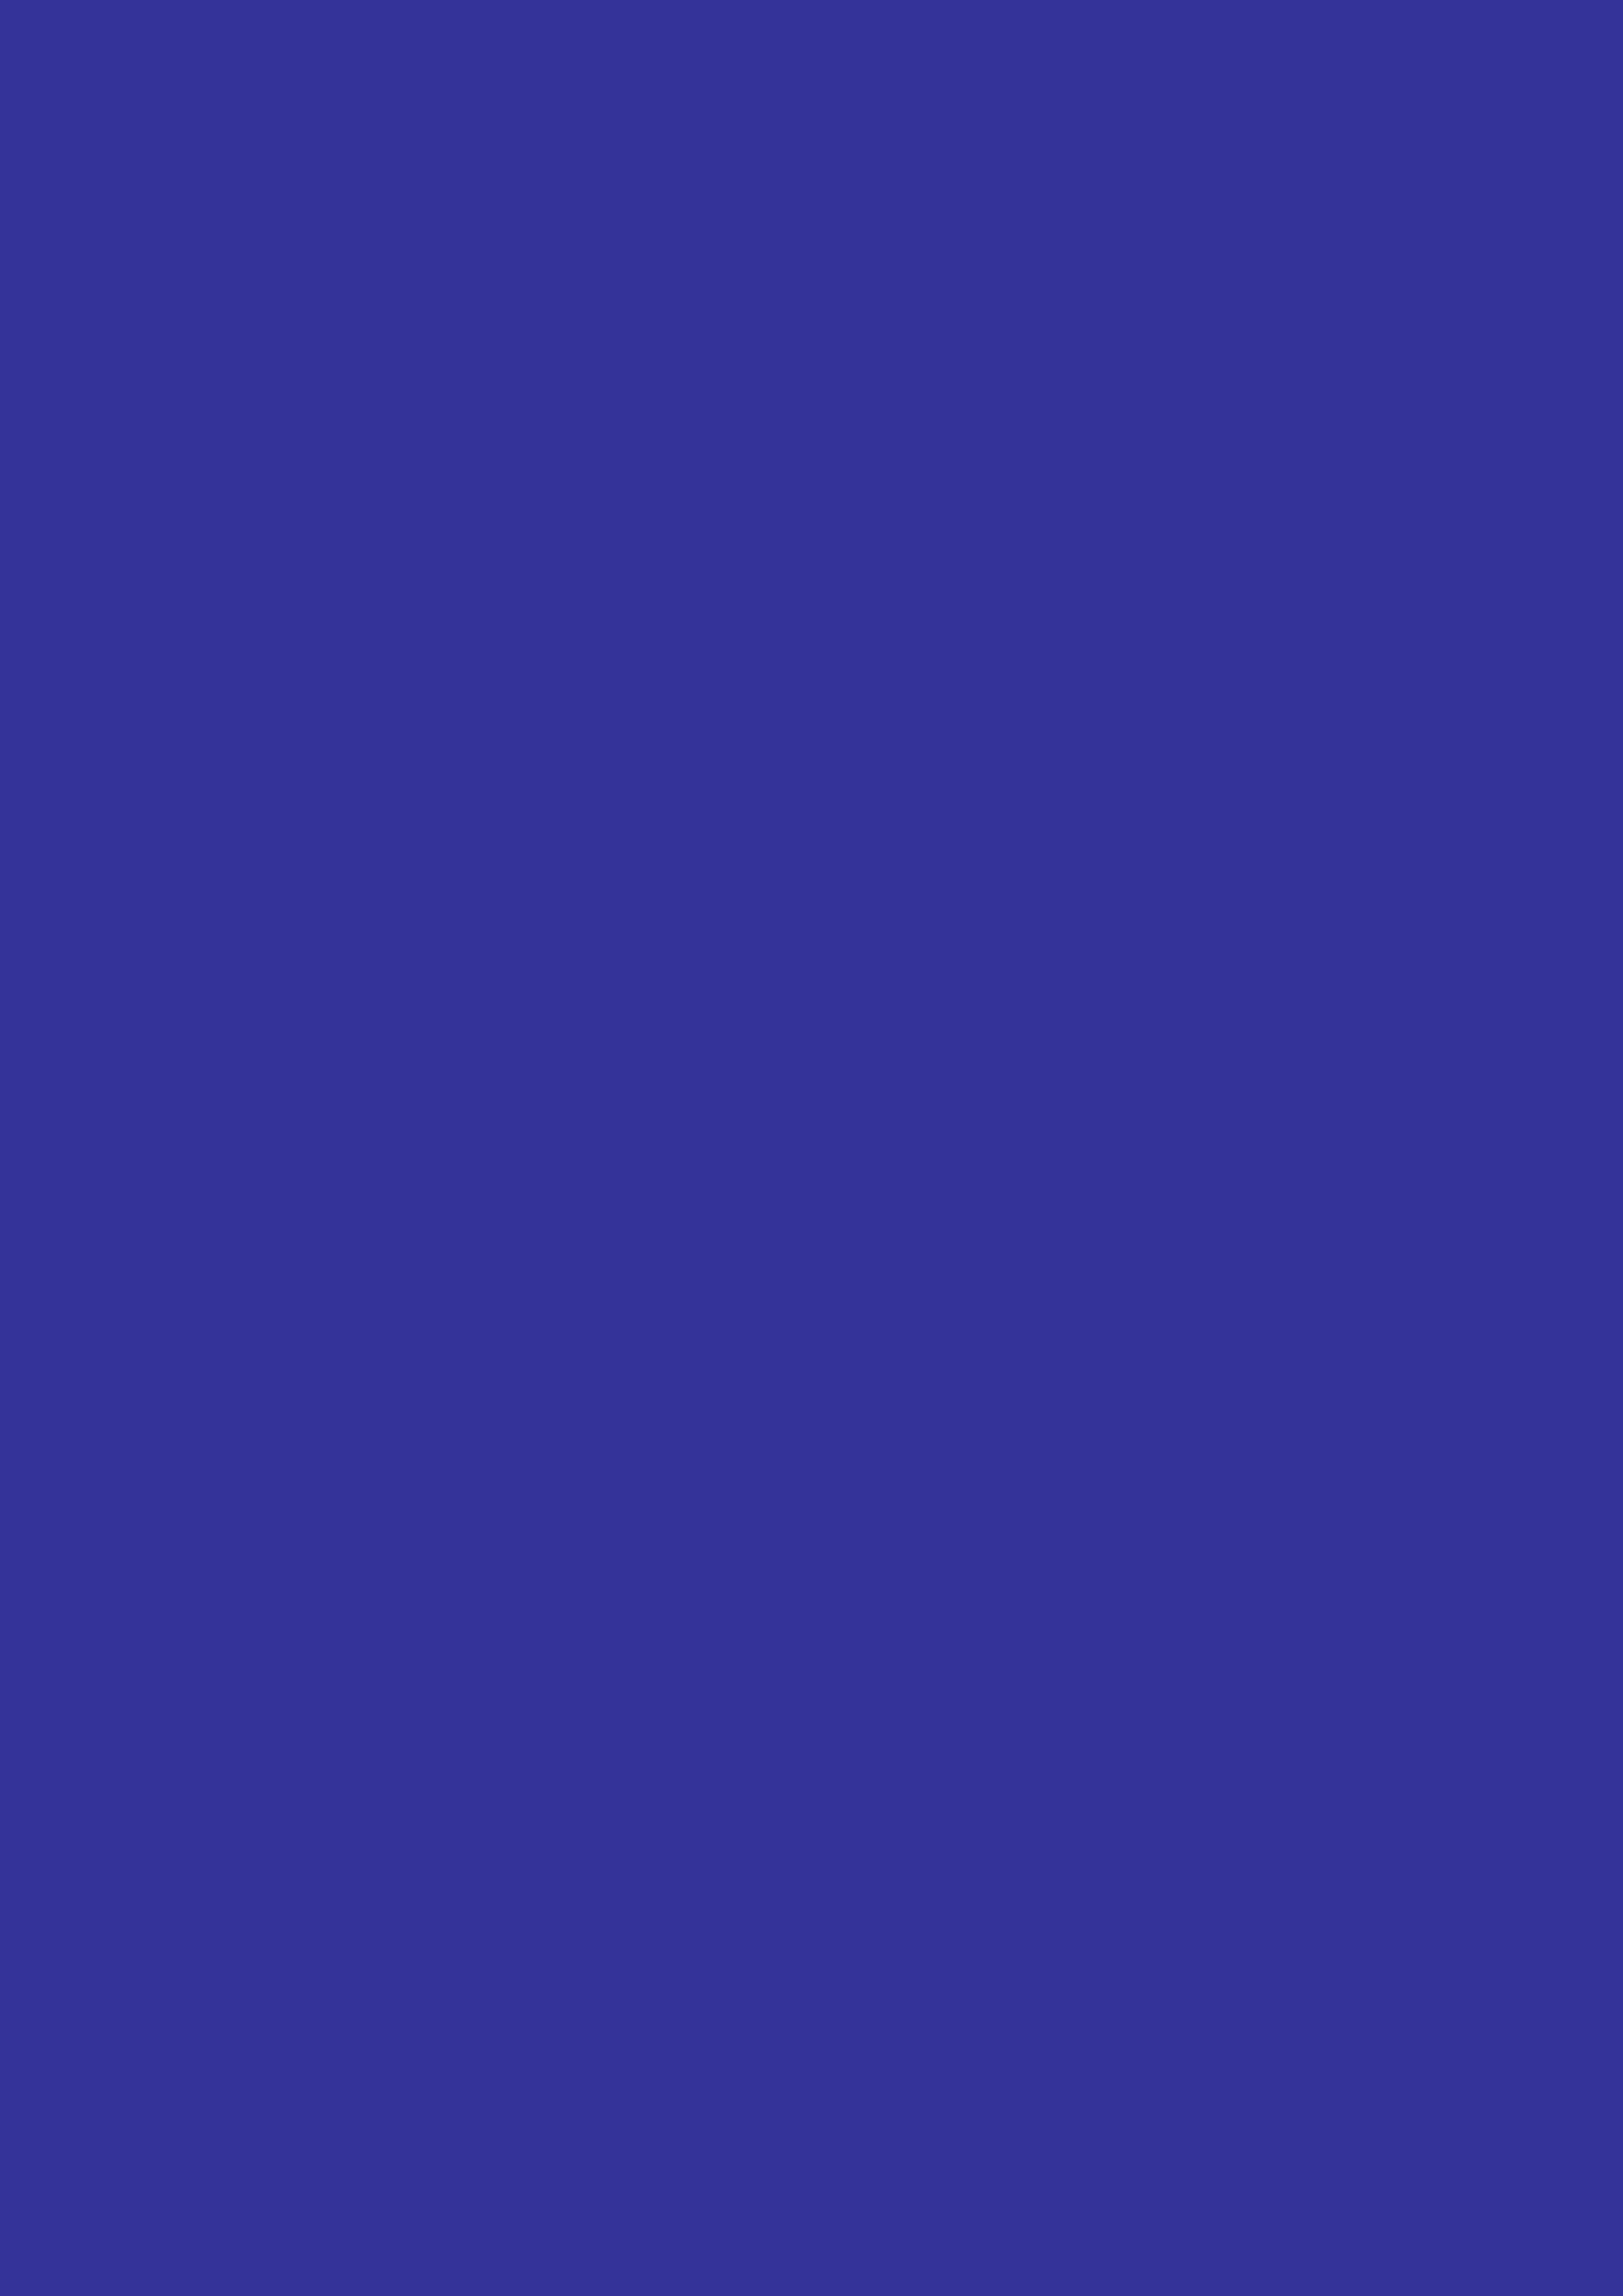 2480x3508 Blue Pigment Solid Color Background